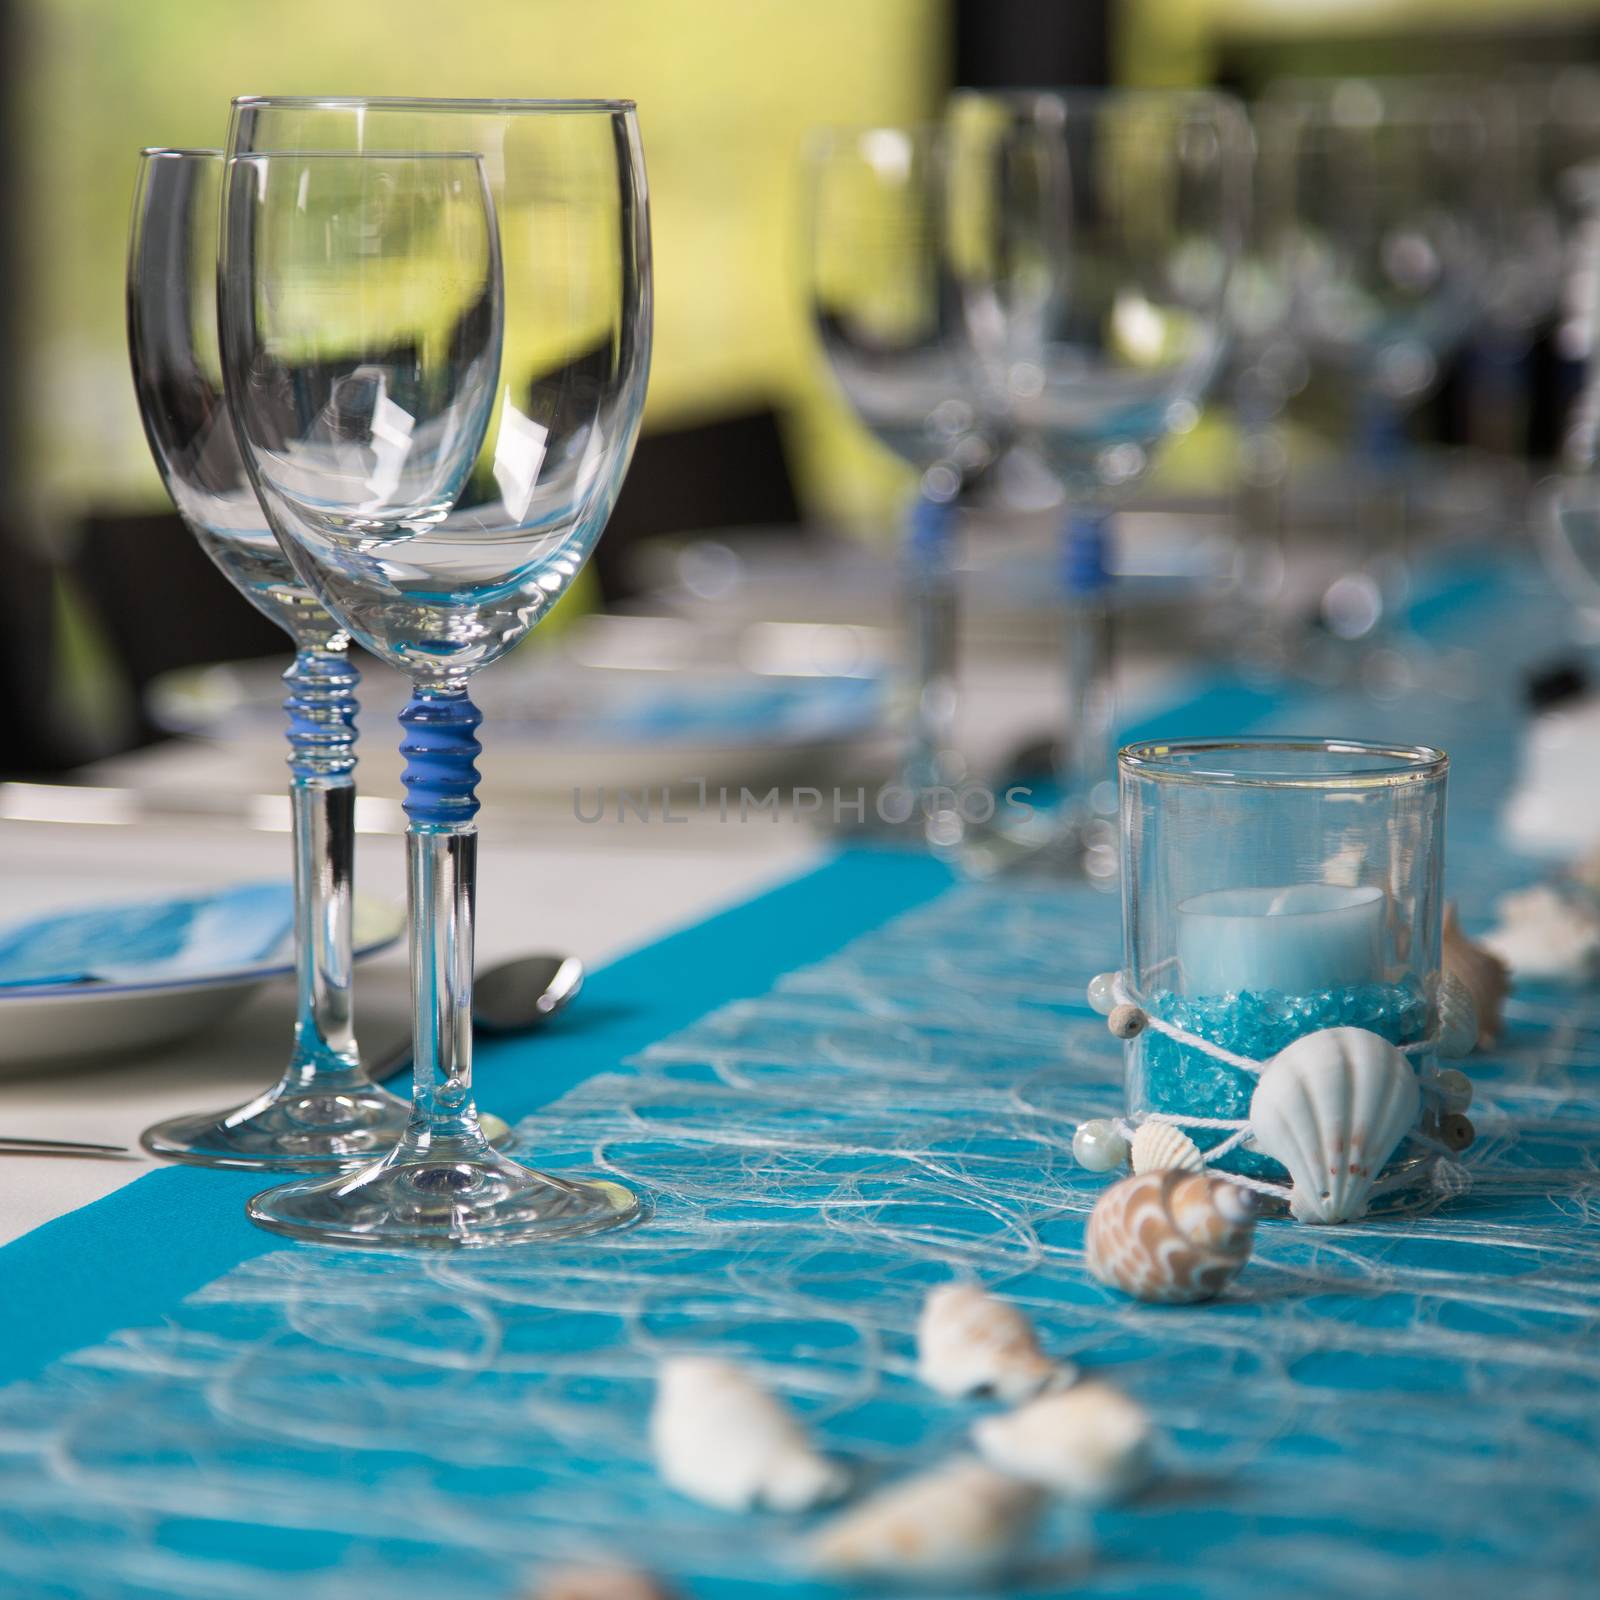 Blue table arrangement for an event party